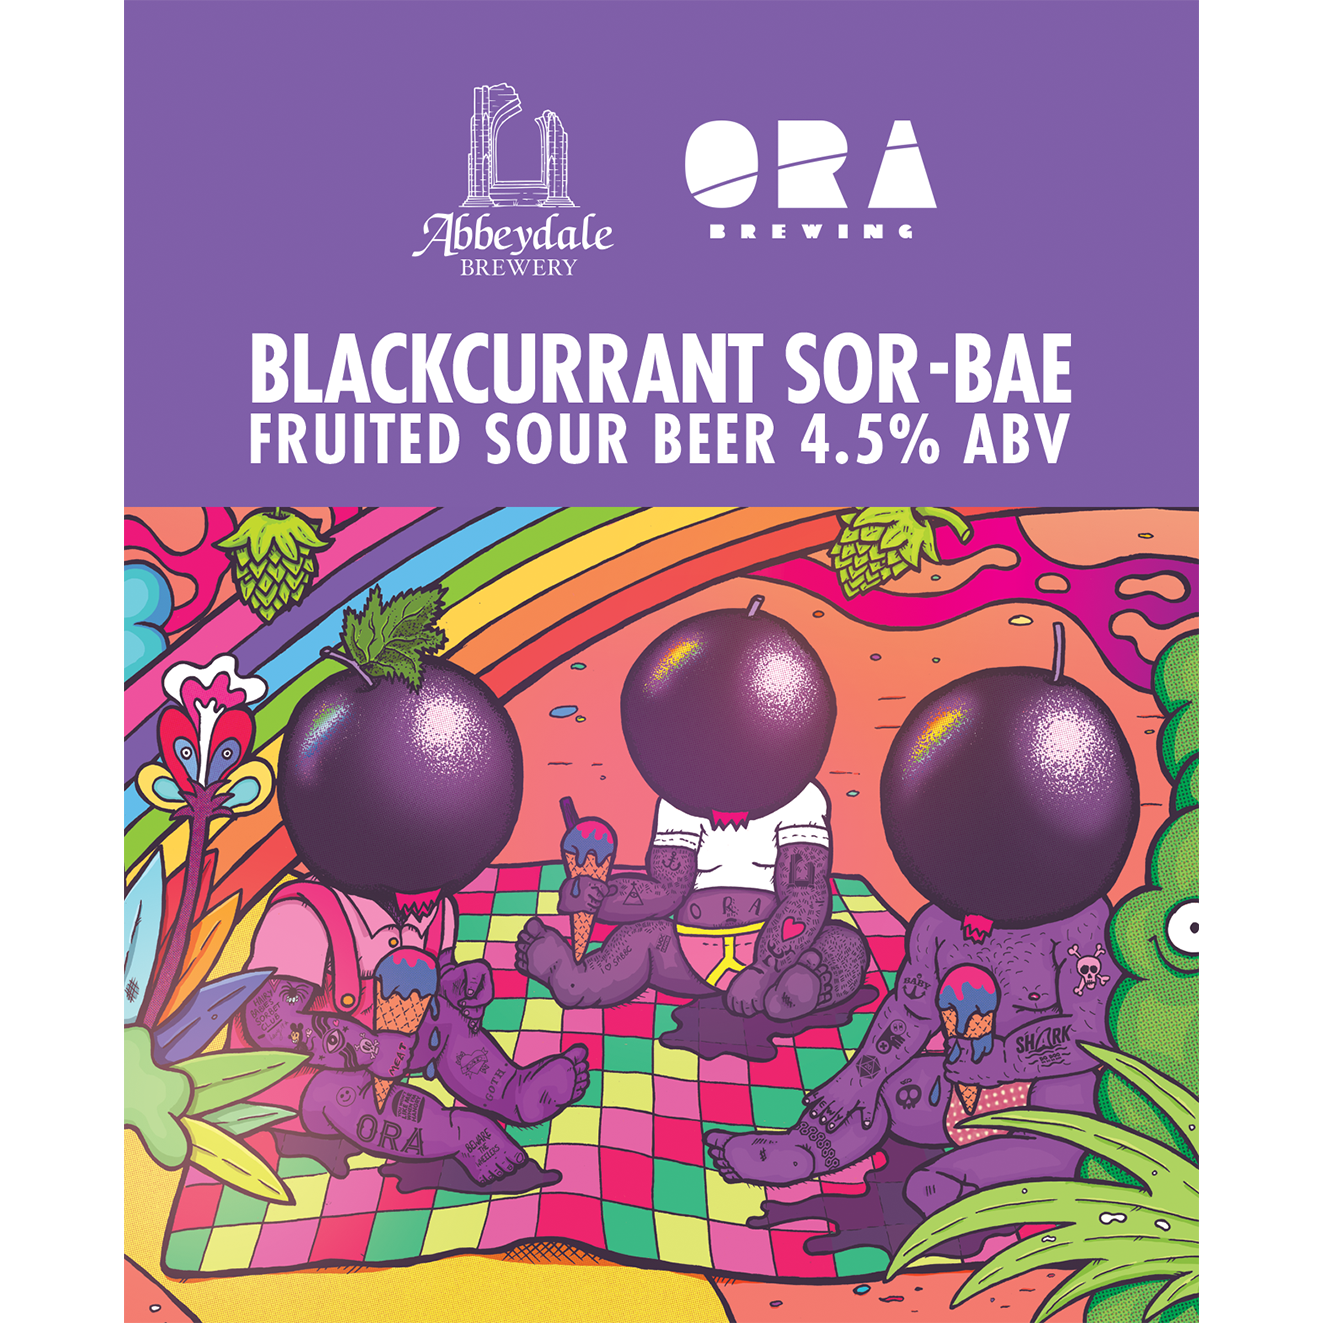 Craft Beer Label Illustration - Abbeydale Brewery - ORA Brewery - Blackcurrant Sor-bae Cask Artwork